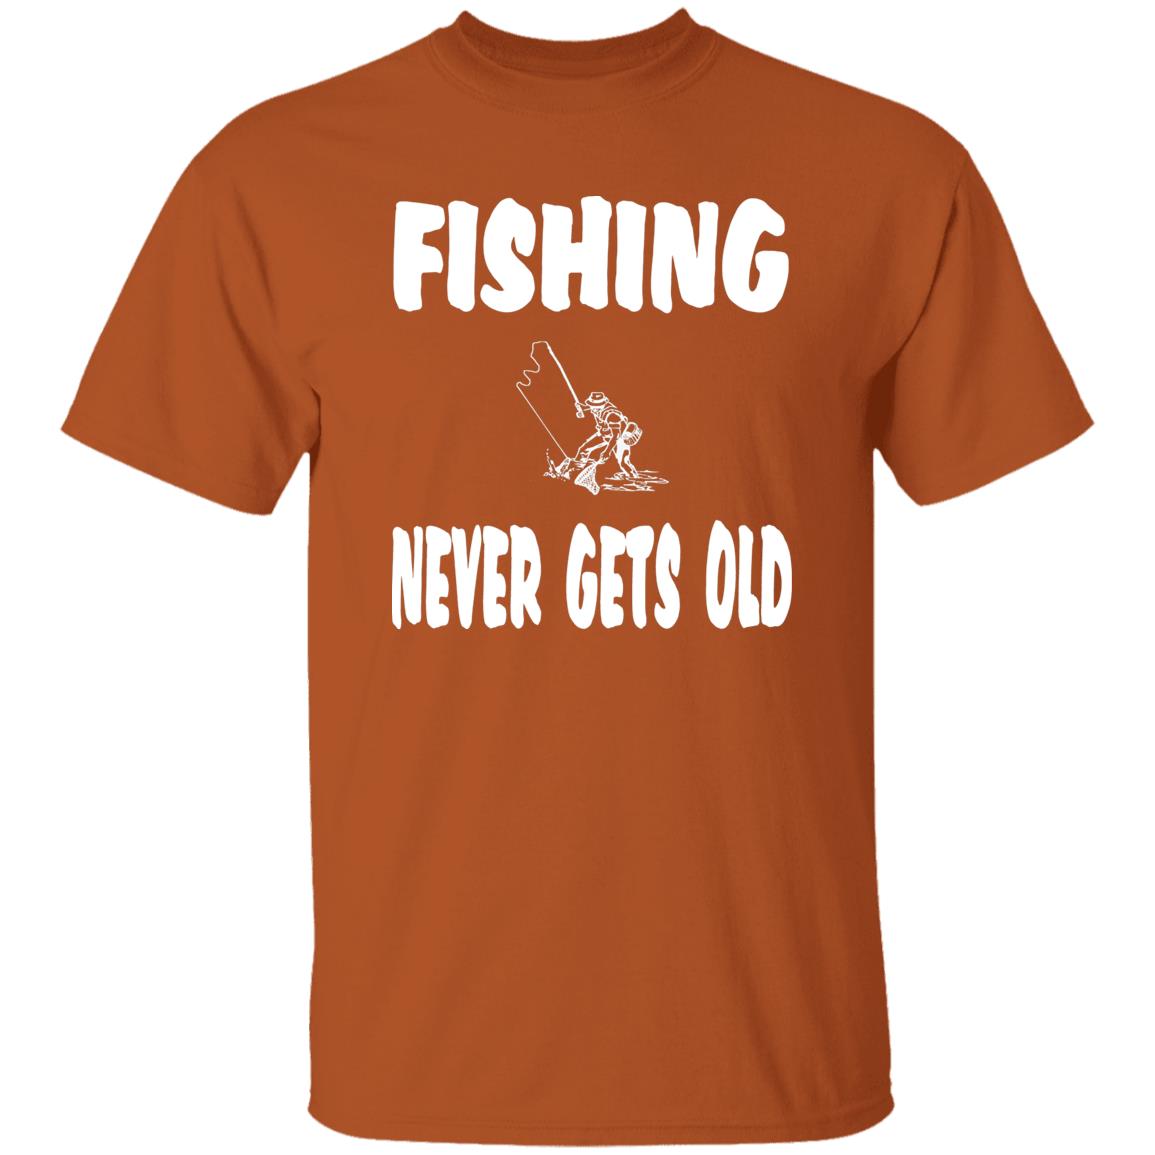 Fishing never gets old w t-shirt texas-orange